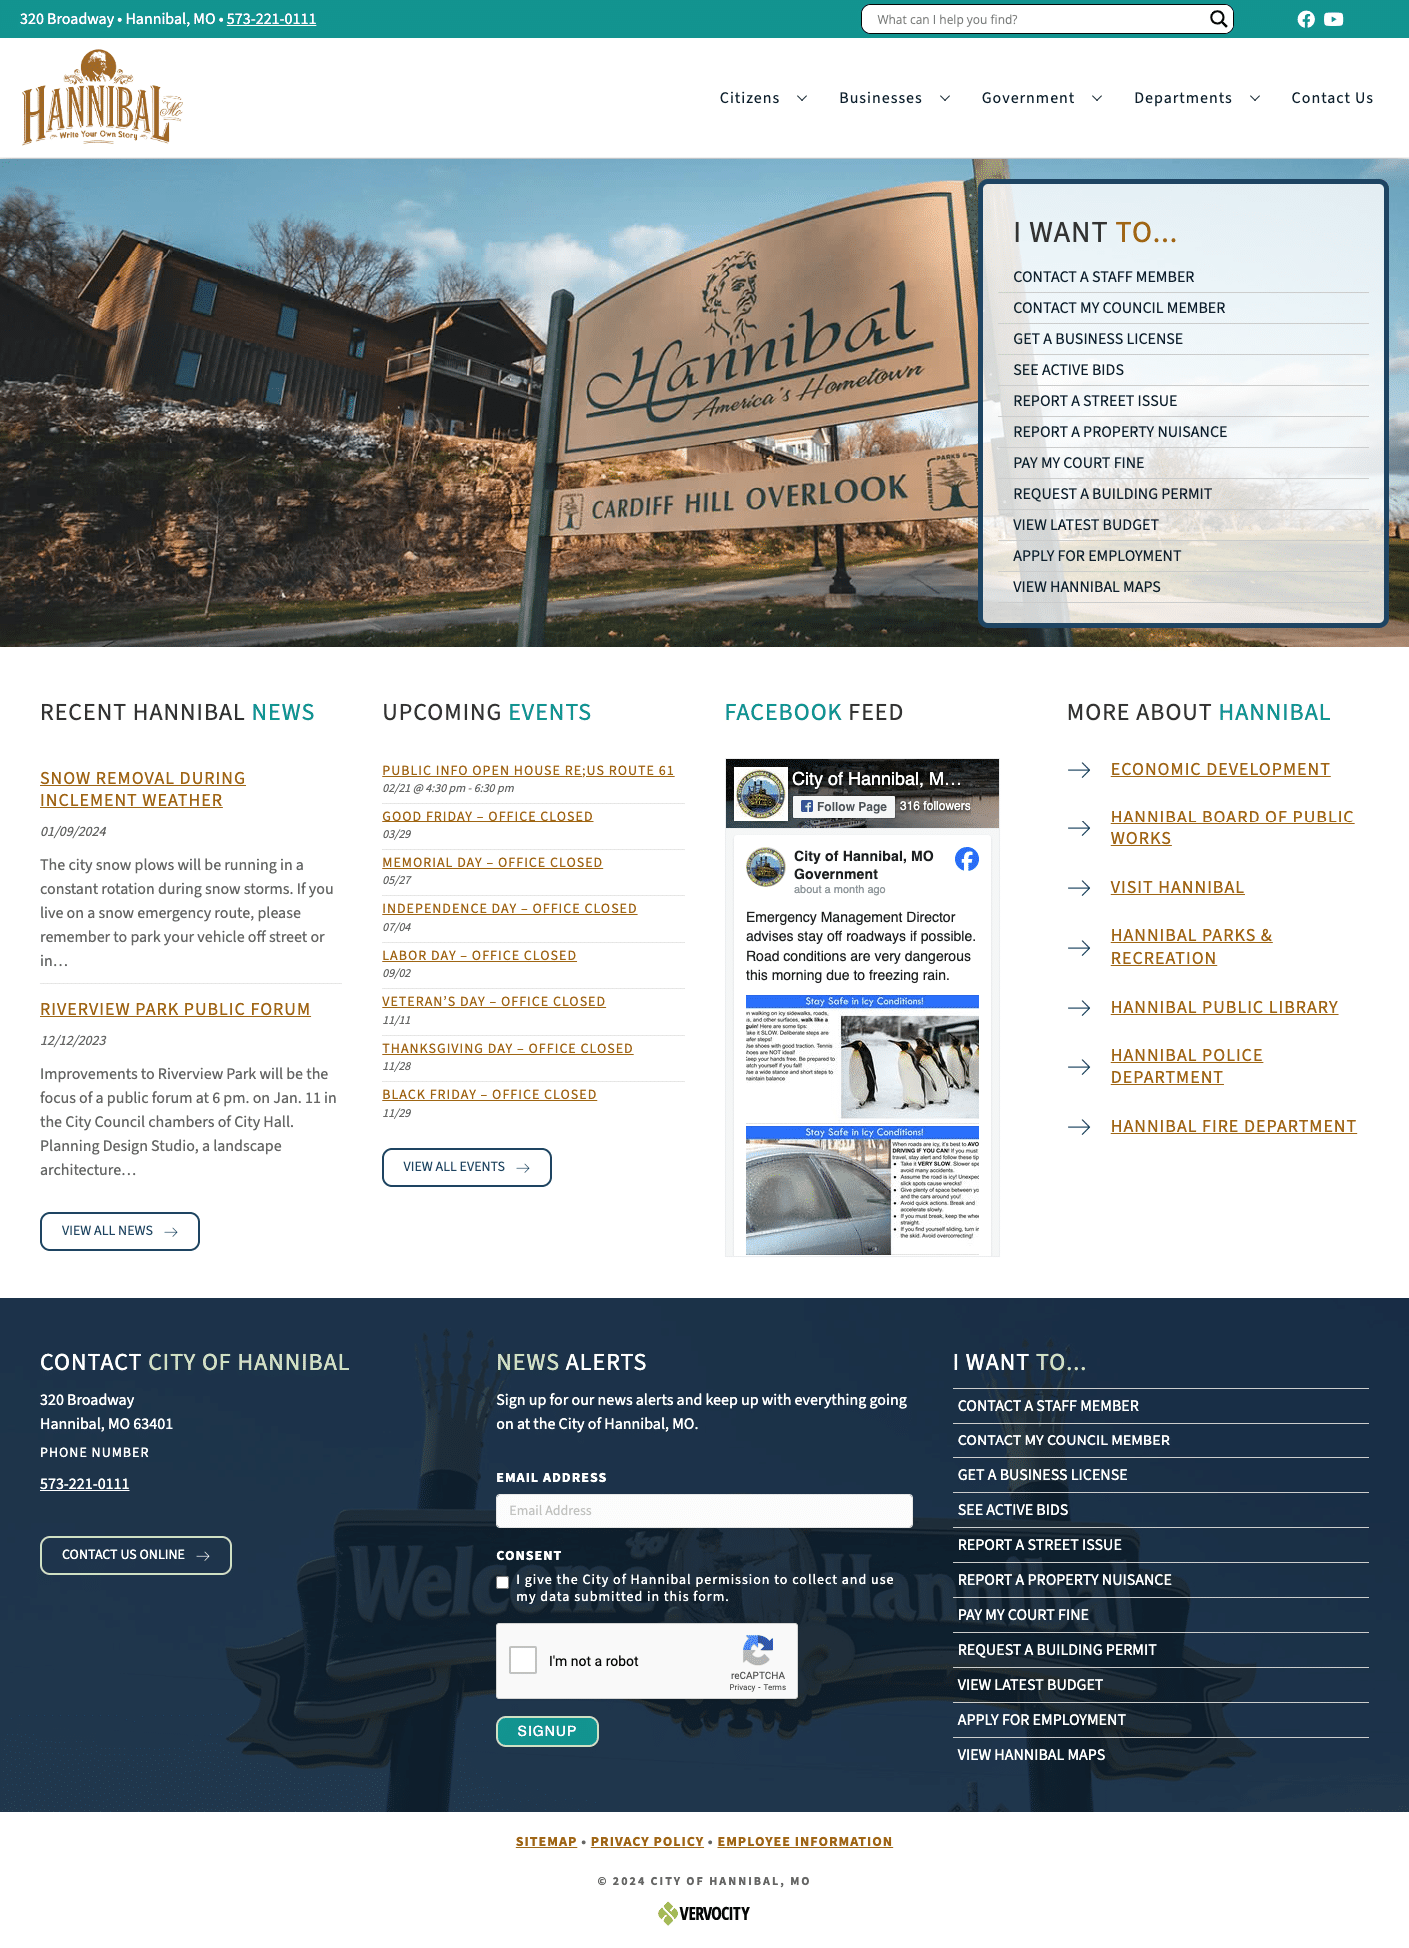 City of Hannibal MO homepage